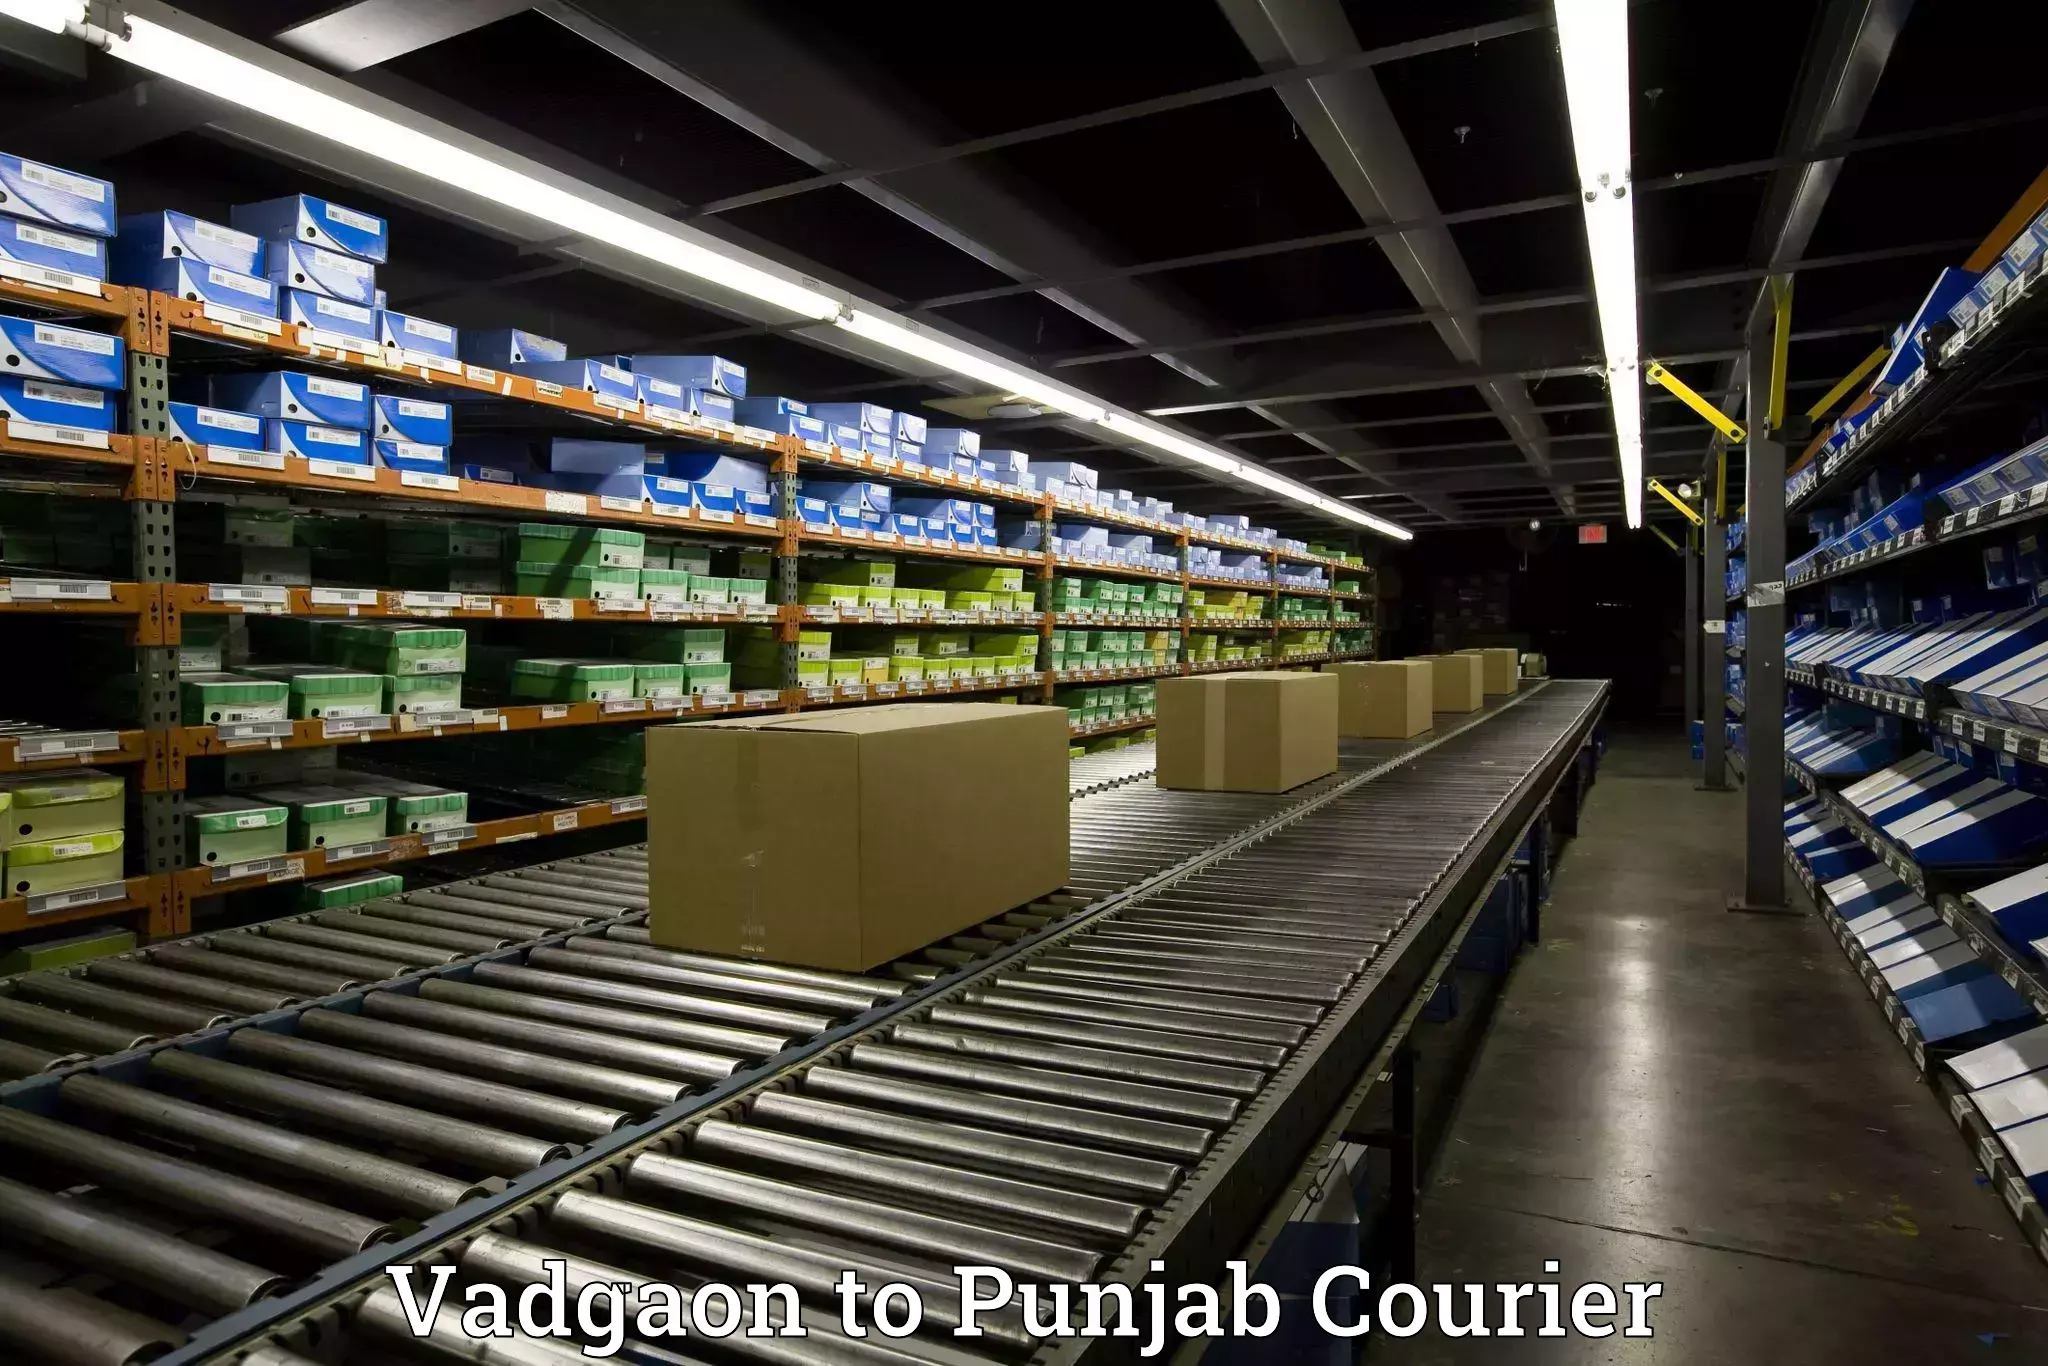 Professional moving company Vadgaon to Punjab